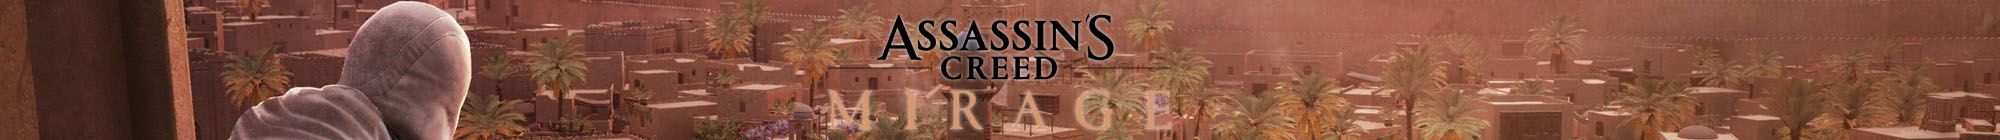 assassins-creed-mirage-banner